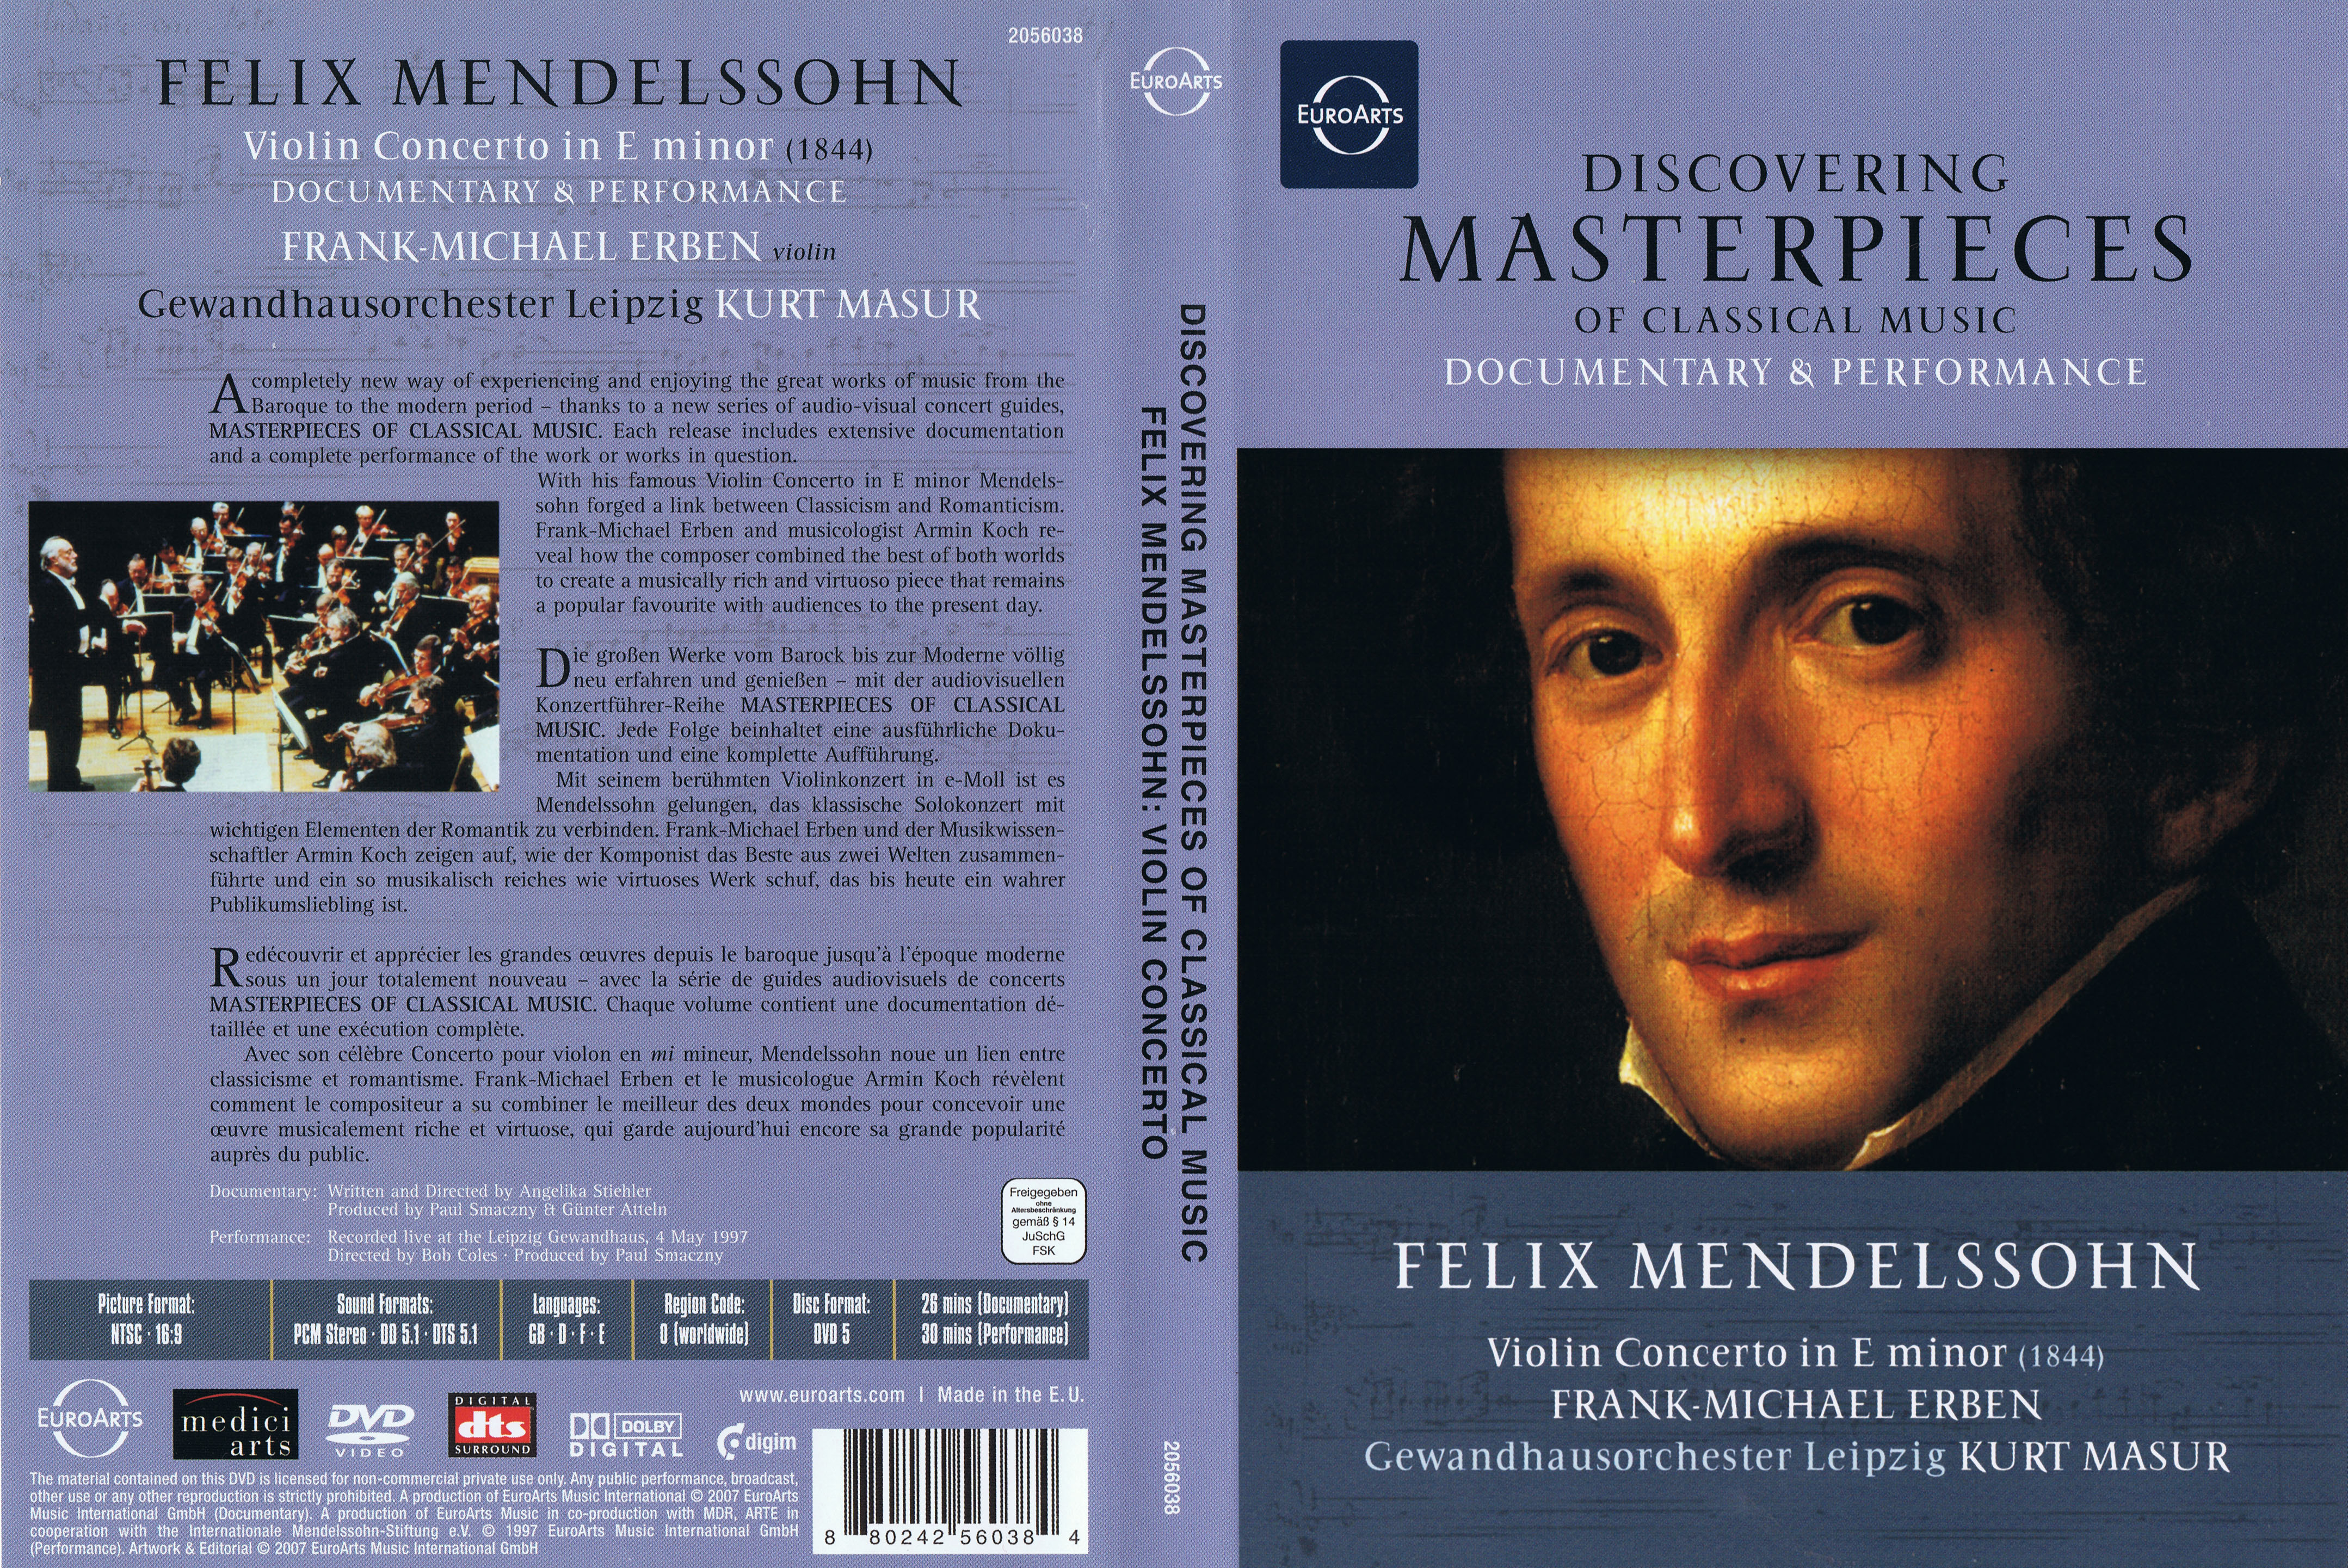 Jaquette DVD Discovering masterpieces - Felix Mendelssohn